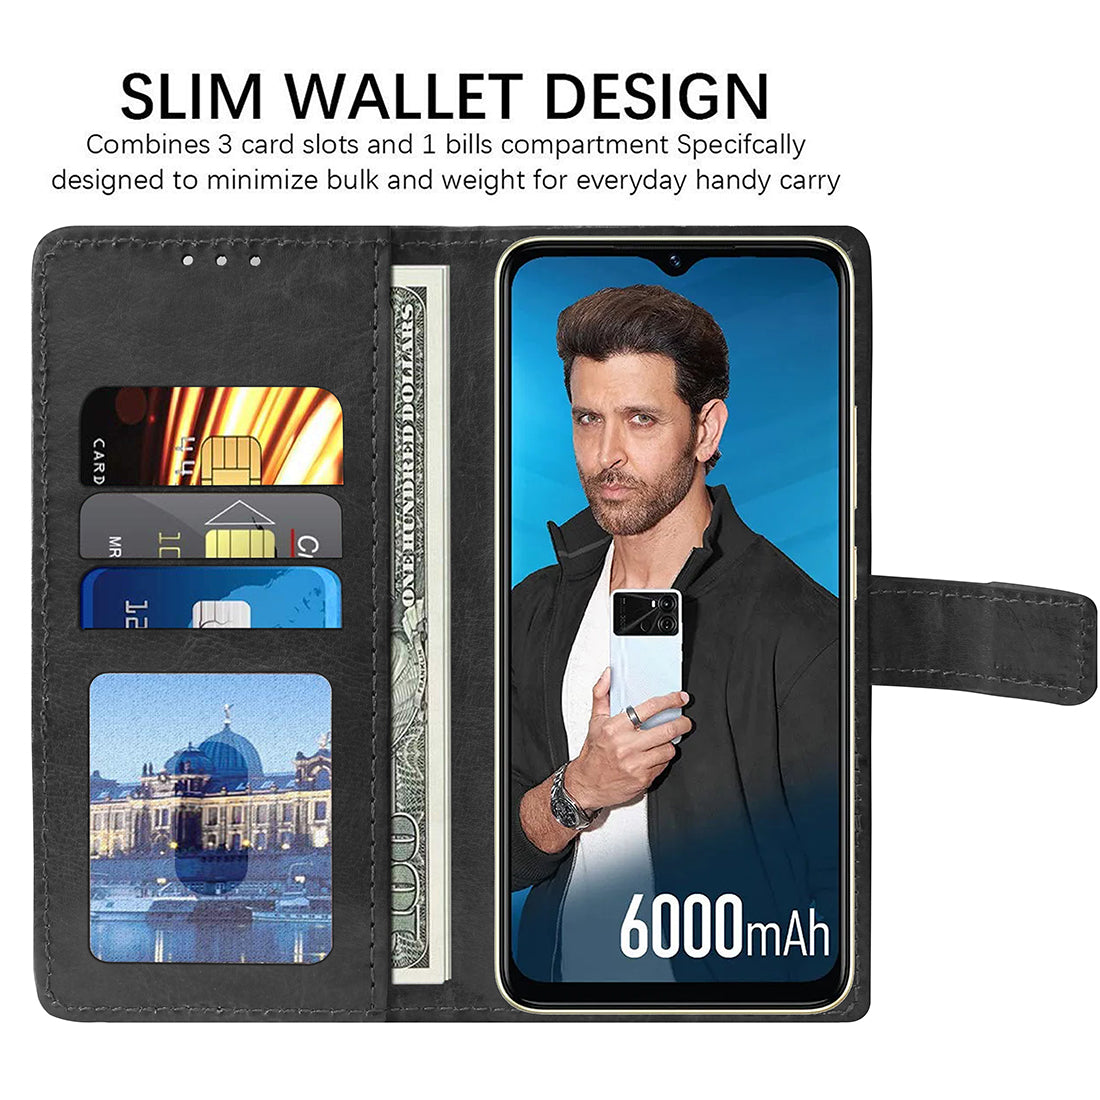 Premium Wallet Flip Cover for Itel P40 4G